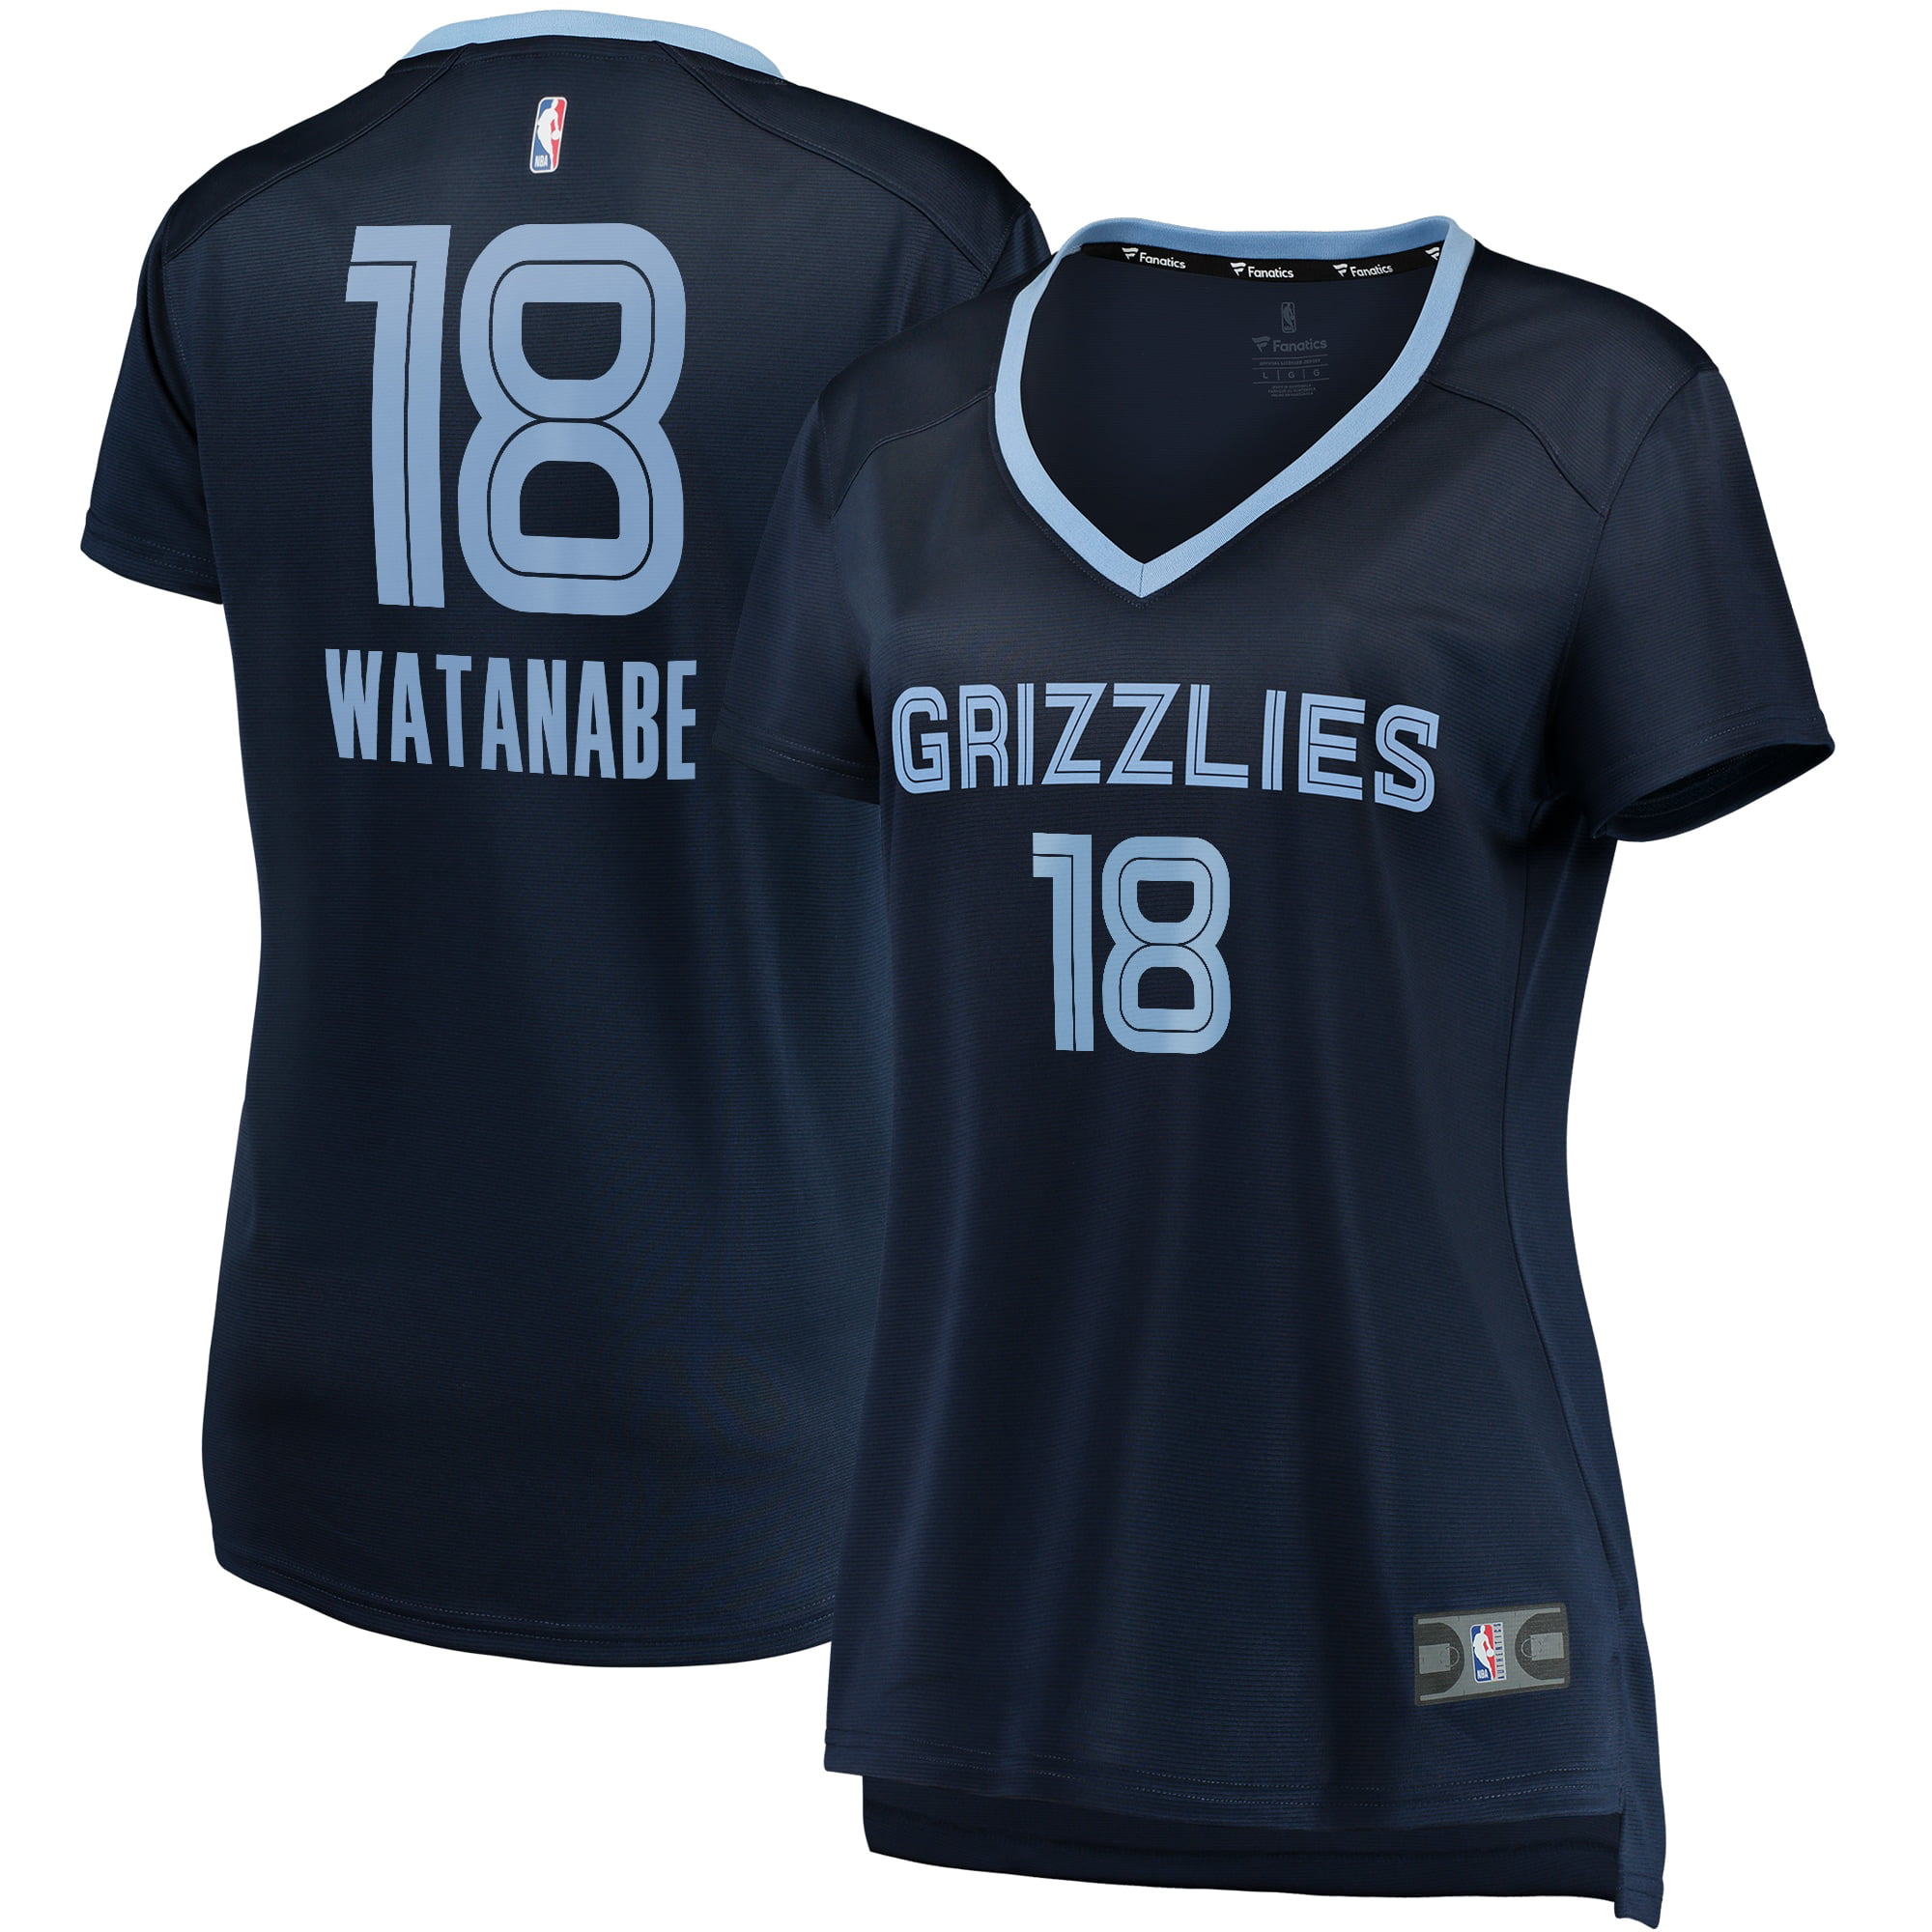 yuta watanabe grizzlies jersey